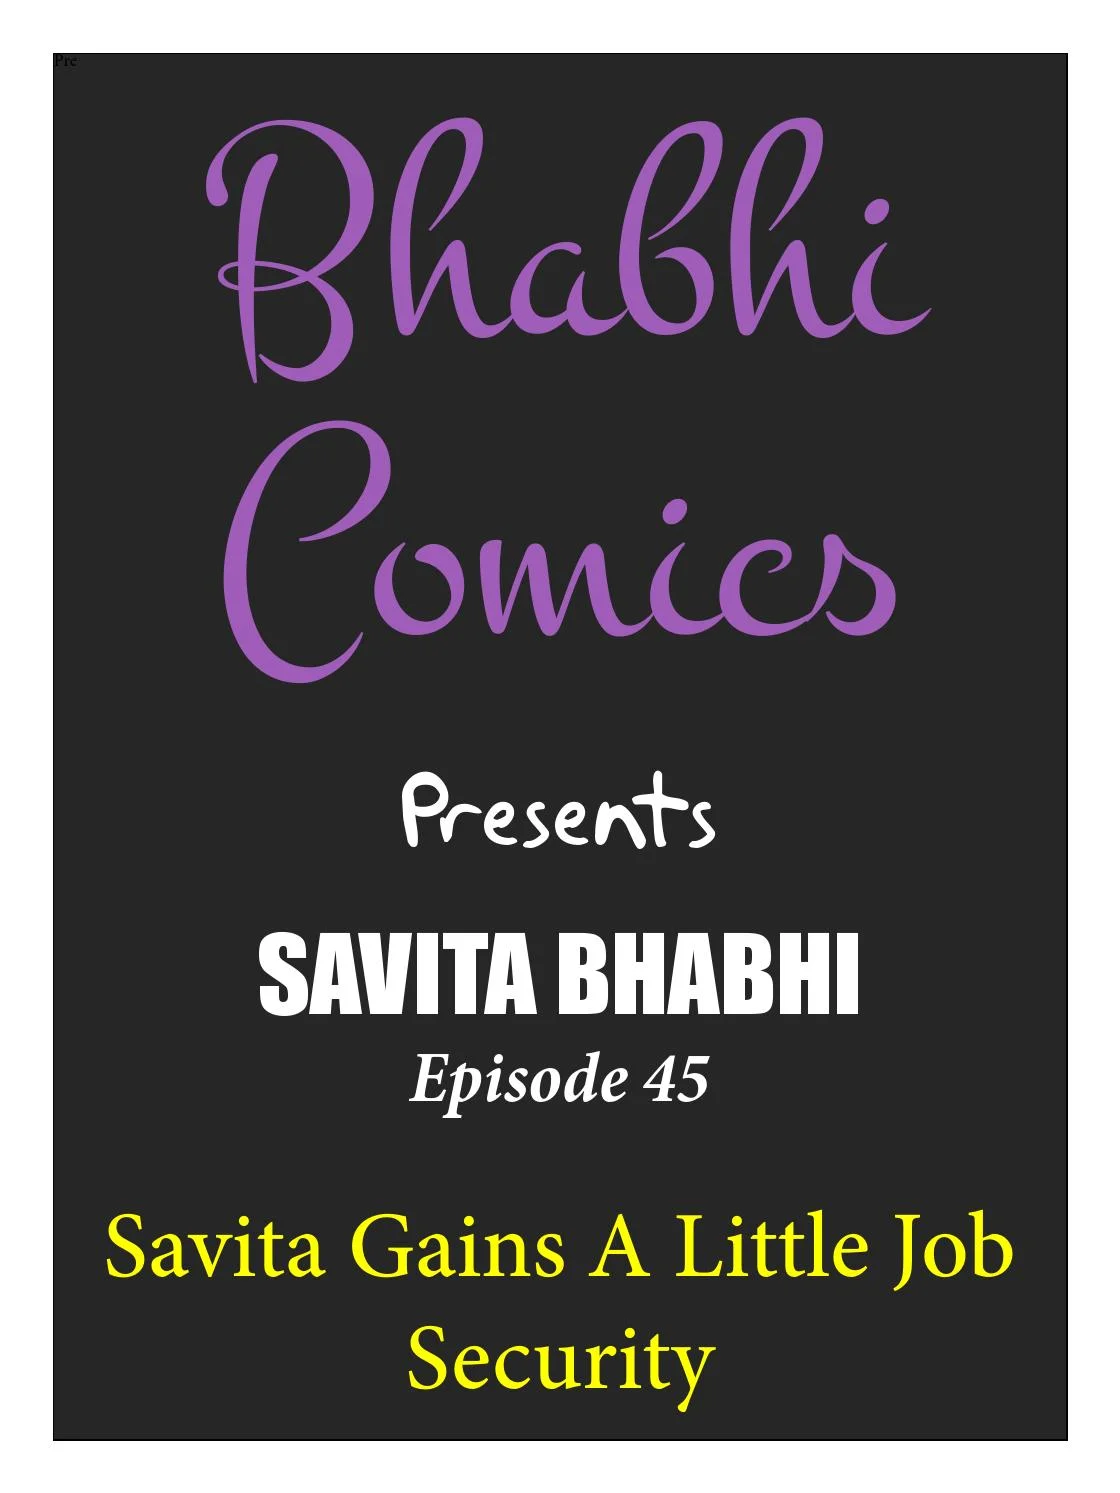 blessing nnachi recommends Savita Bhabhi Free Episode